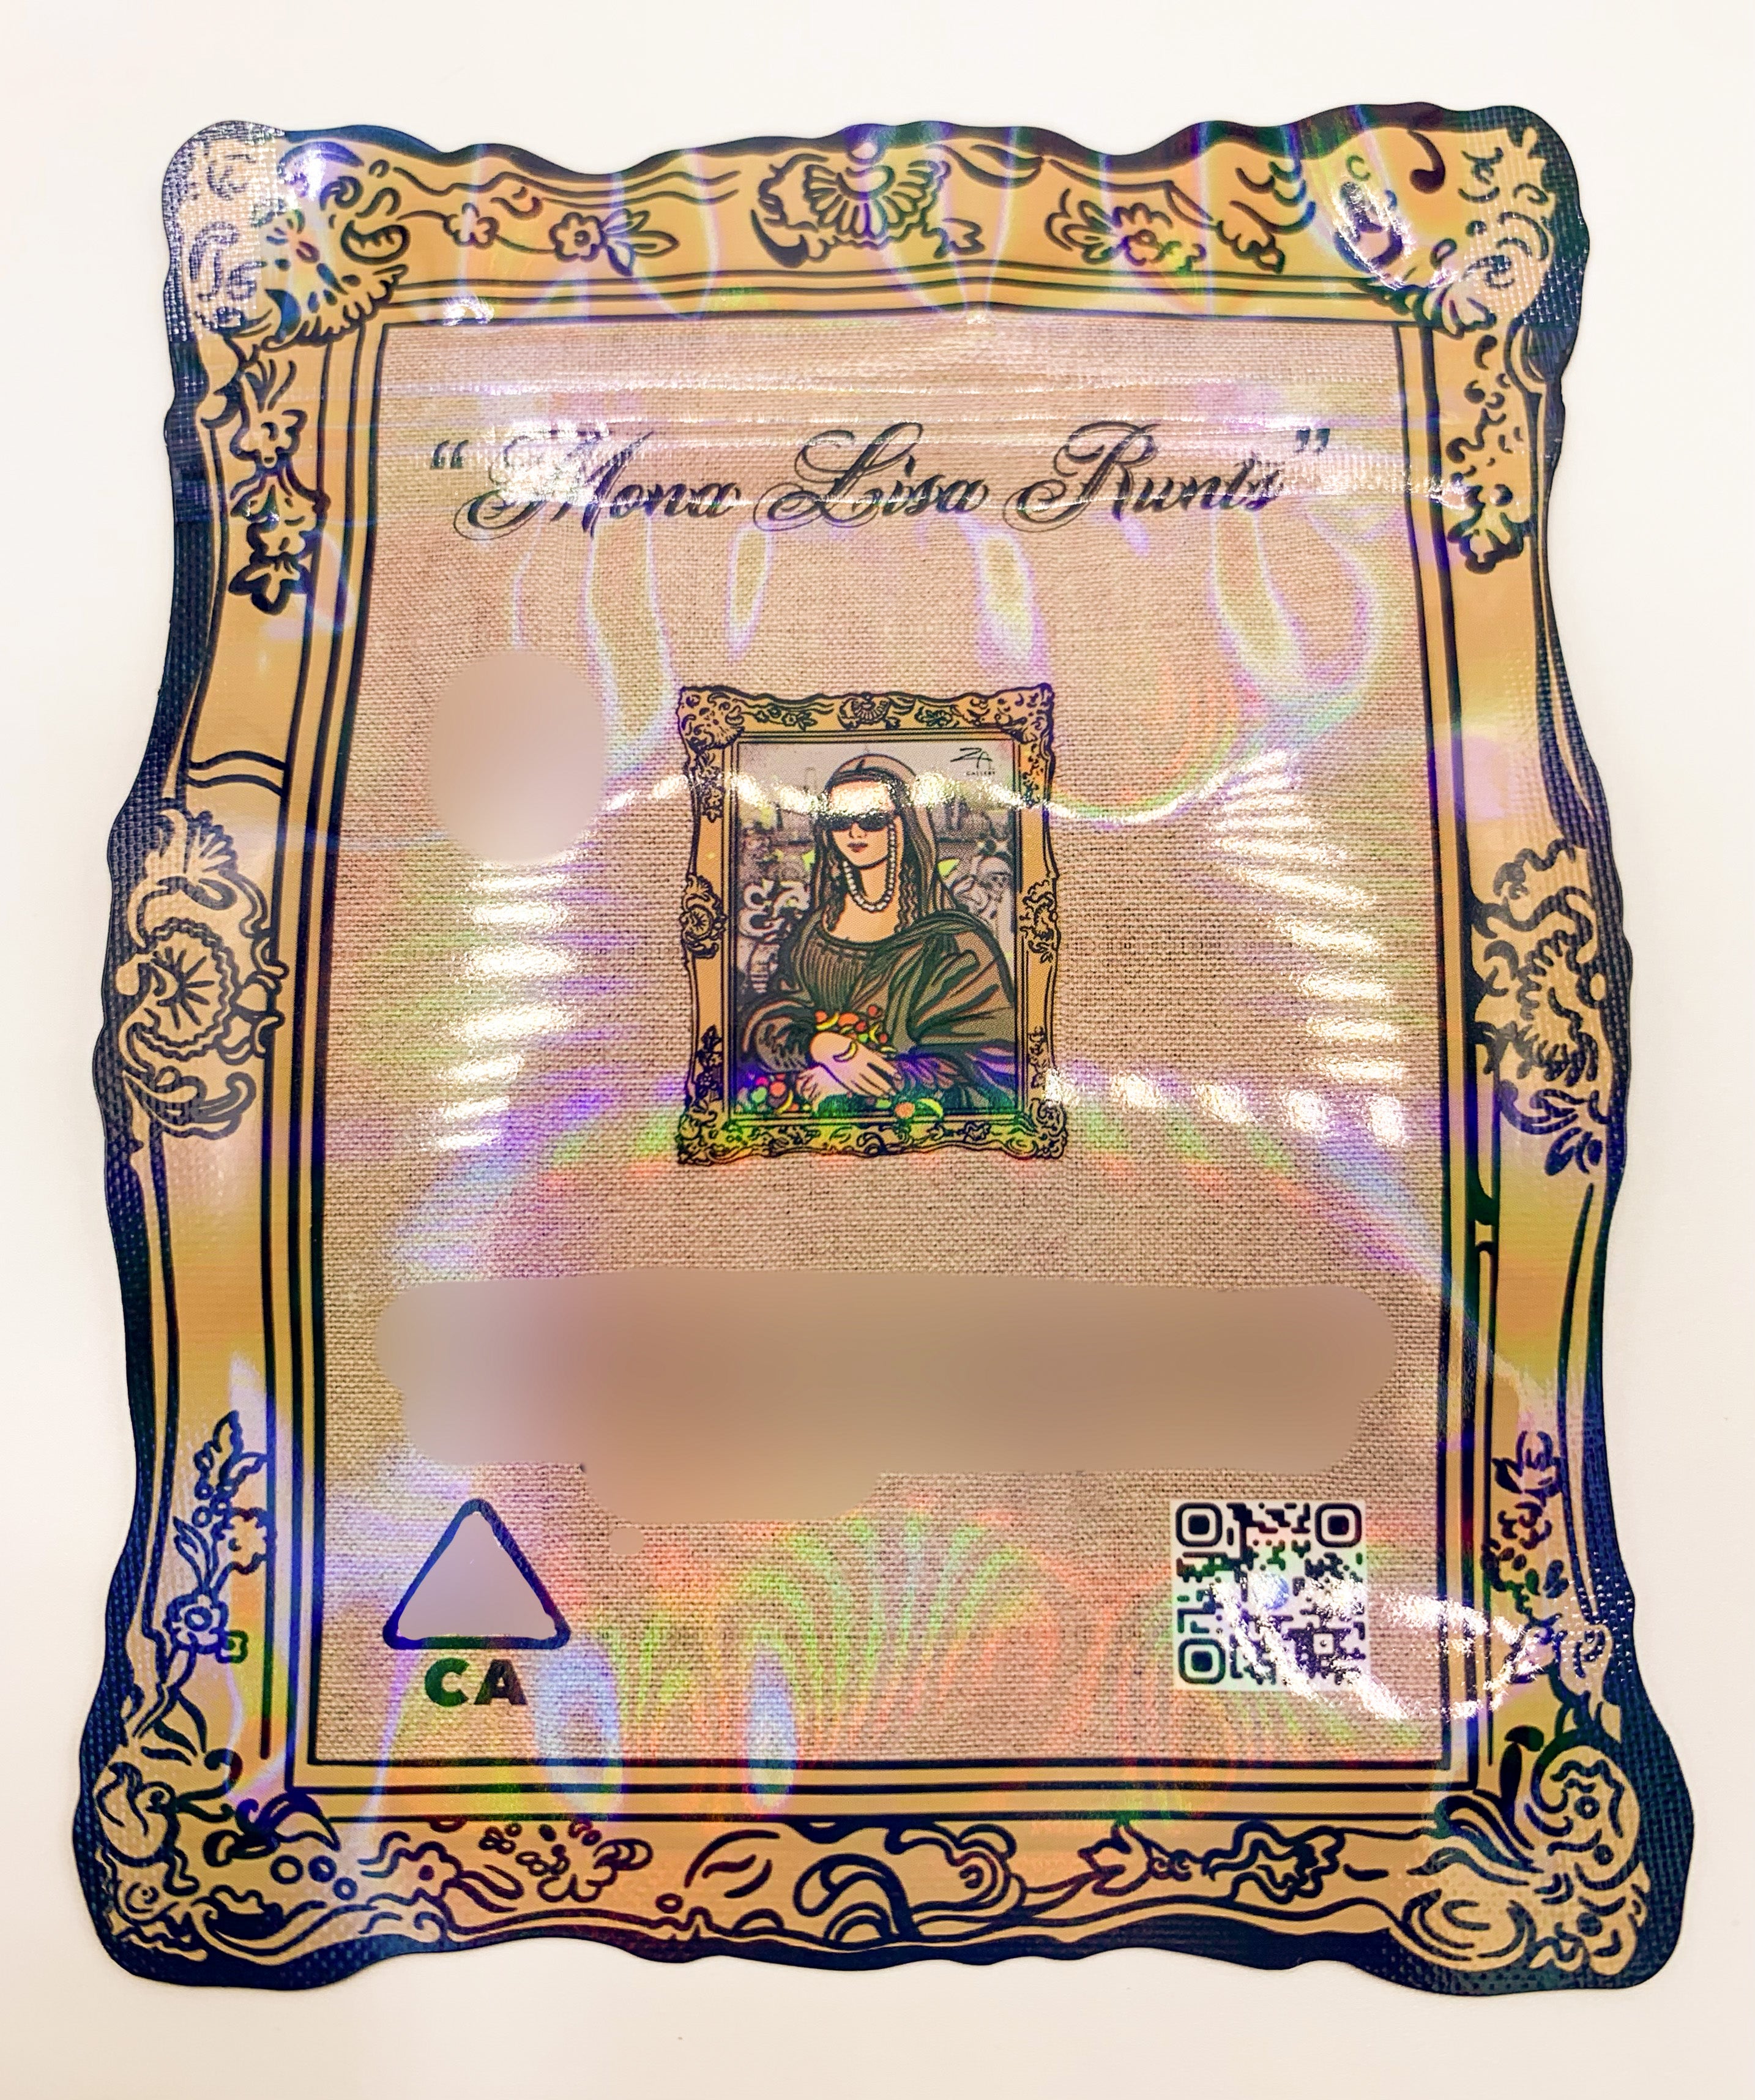 3D ZA Gallery Mona Lisa Runtz 3.5g Mylar Bags